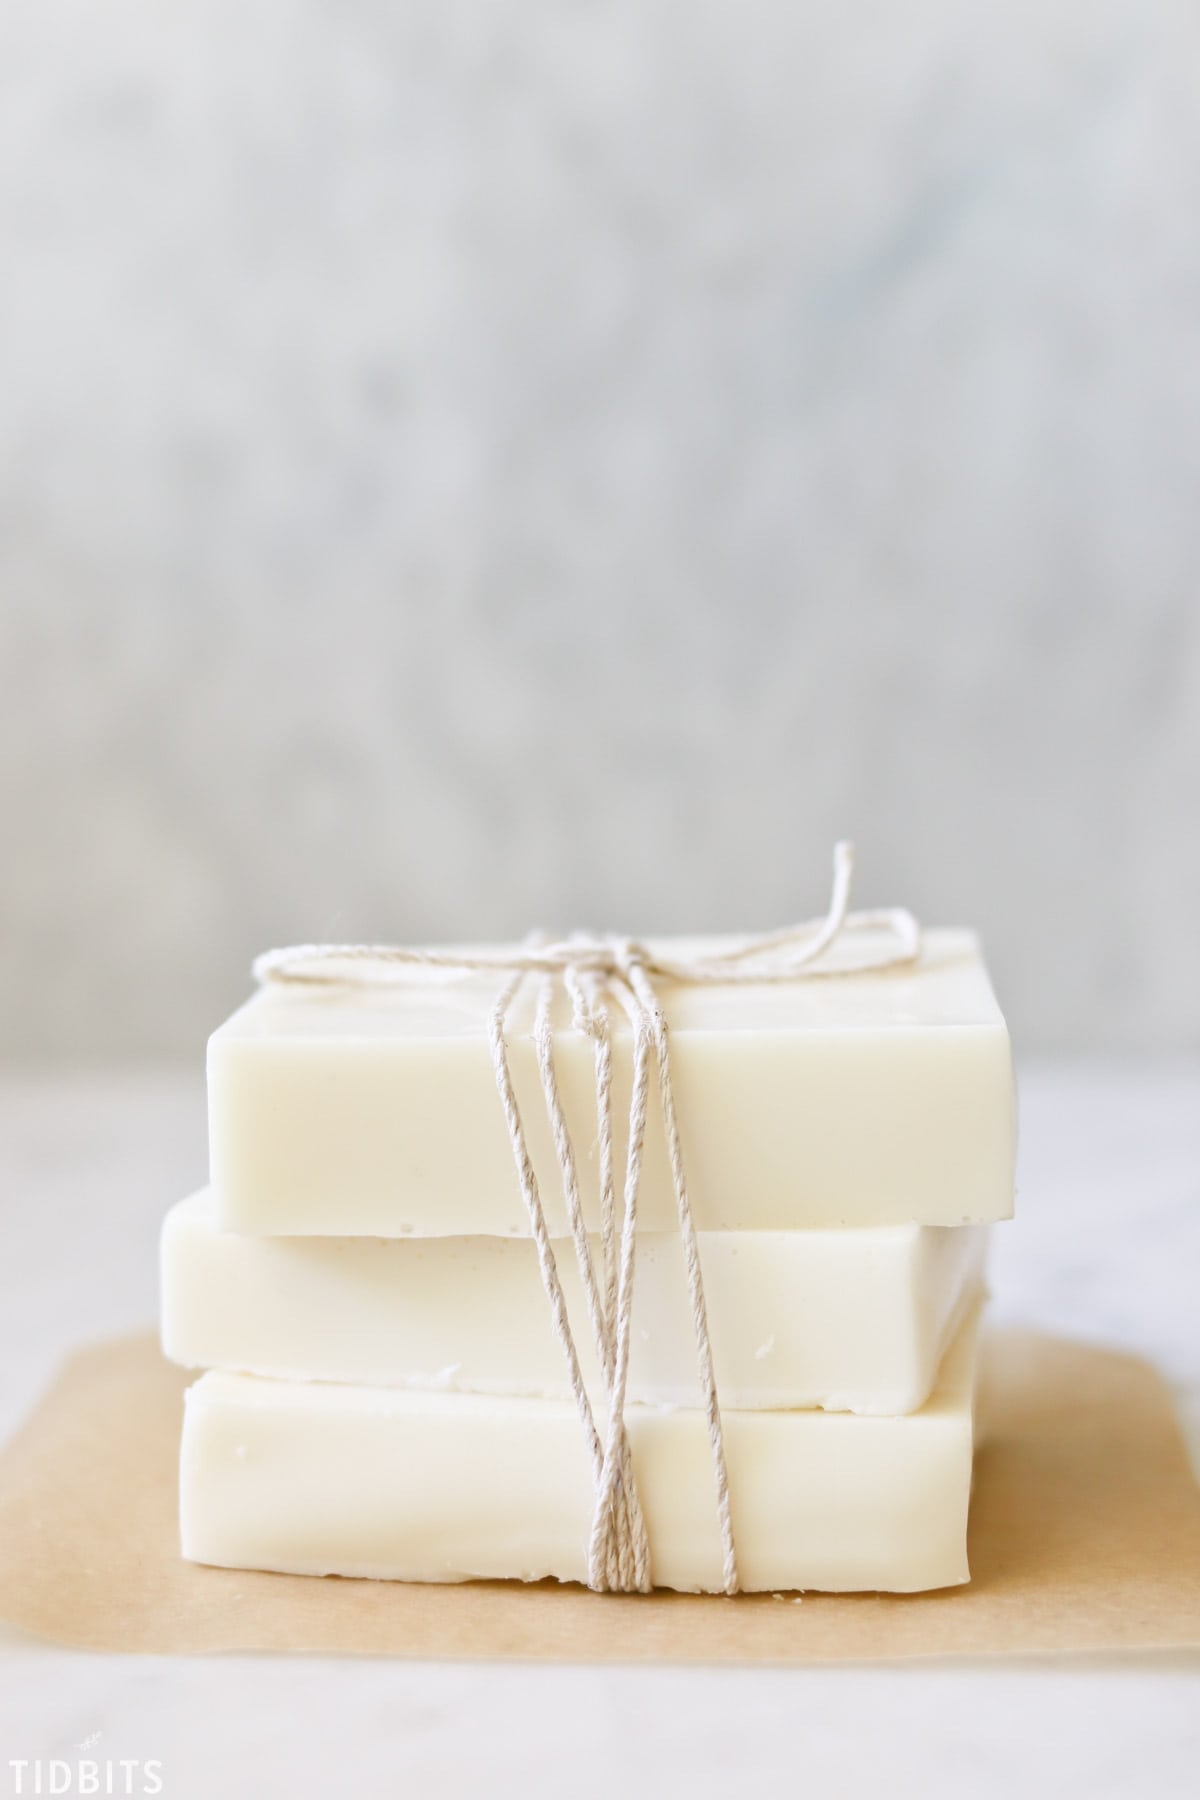 Ideas for packaging handmade soap